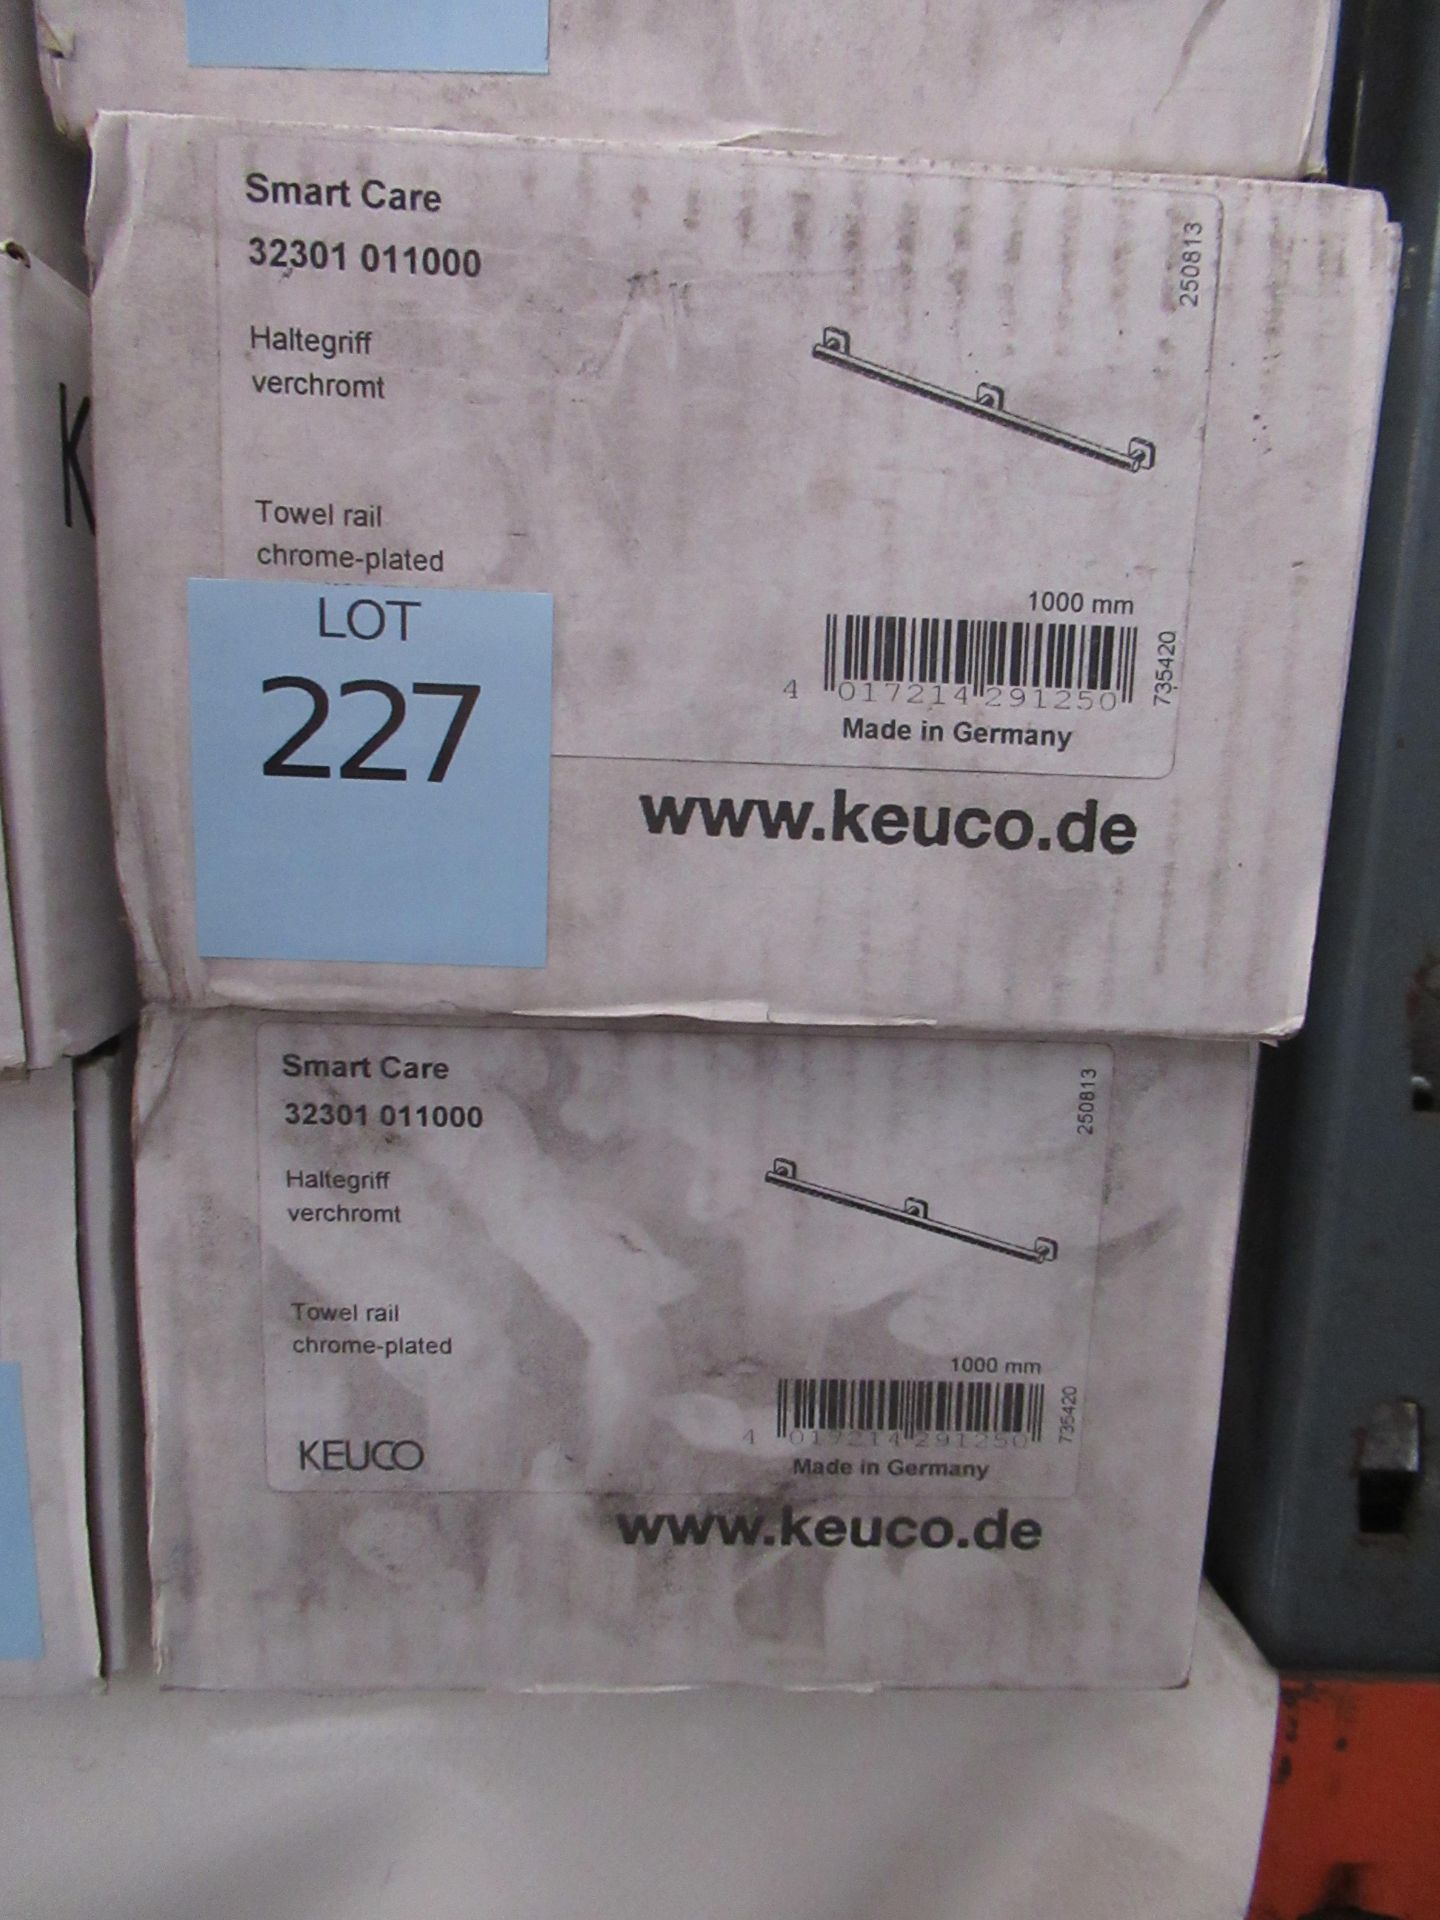 2 x Keuco Smart Care Towel Rail 1000mm, Chrome Plated, P/N 32301-011000 - Image 2 of 2